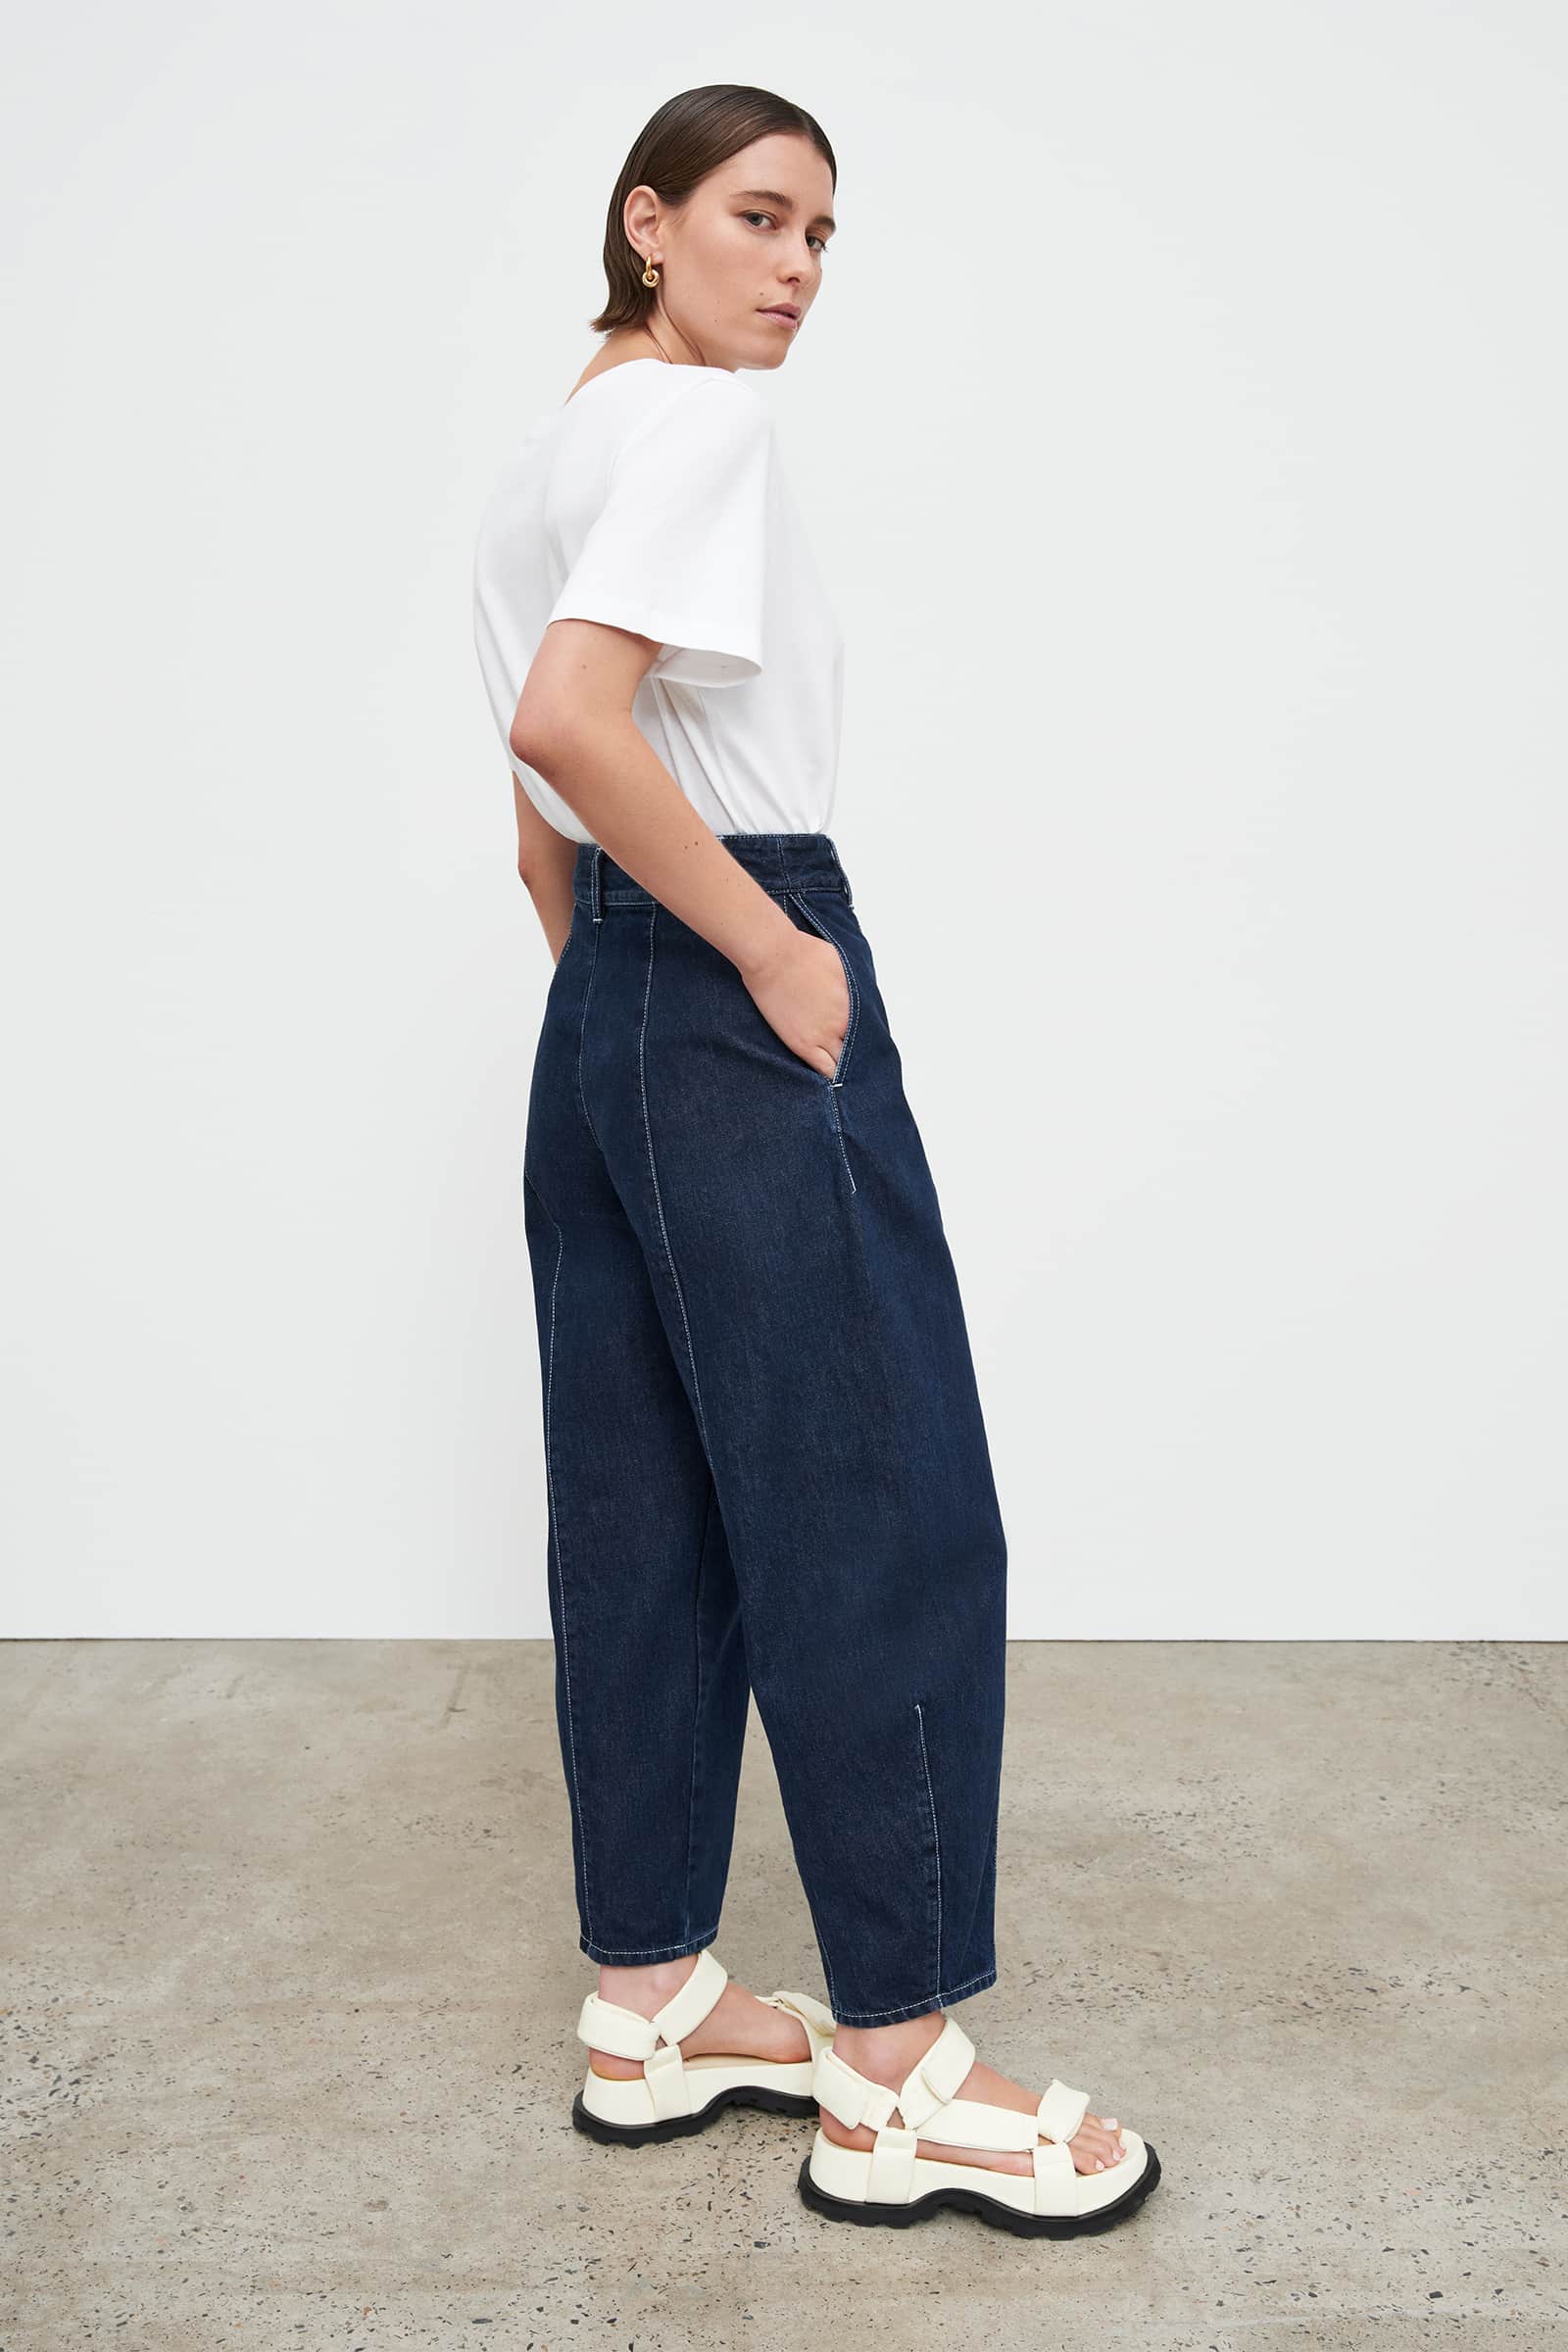 Shop Form Jeans - Indigo Denim | Kowtow United States